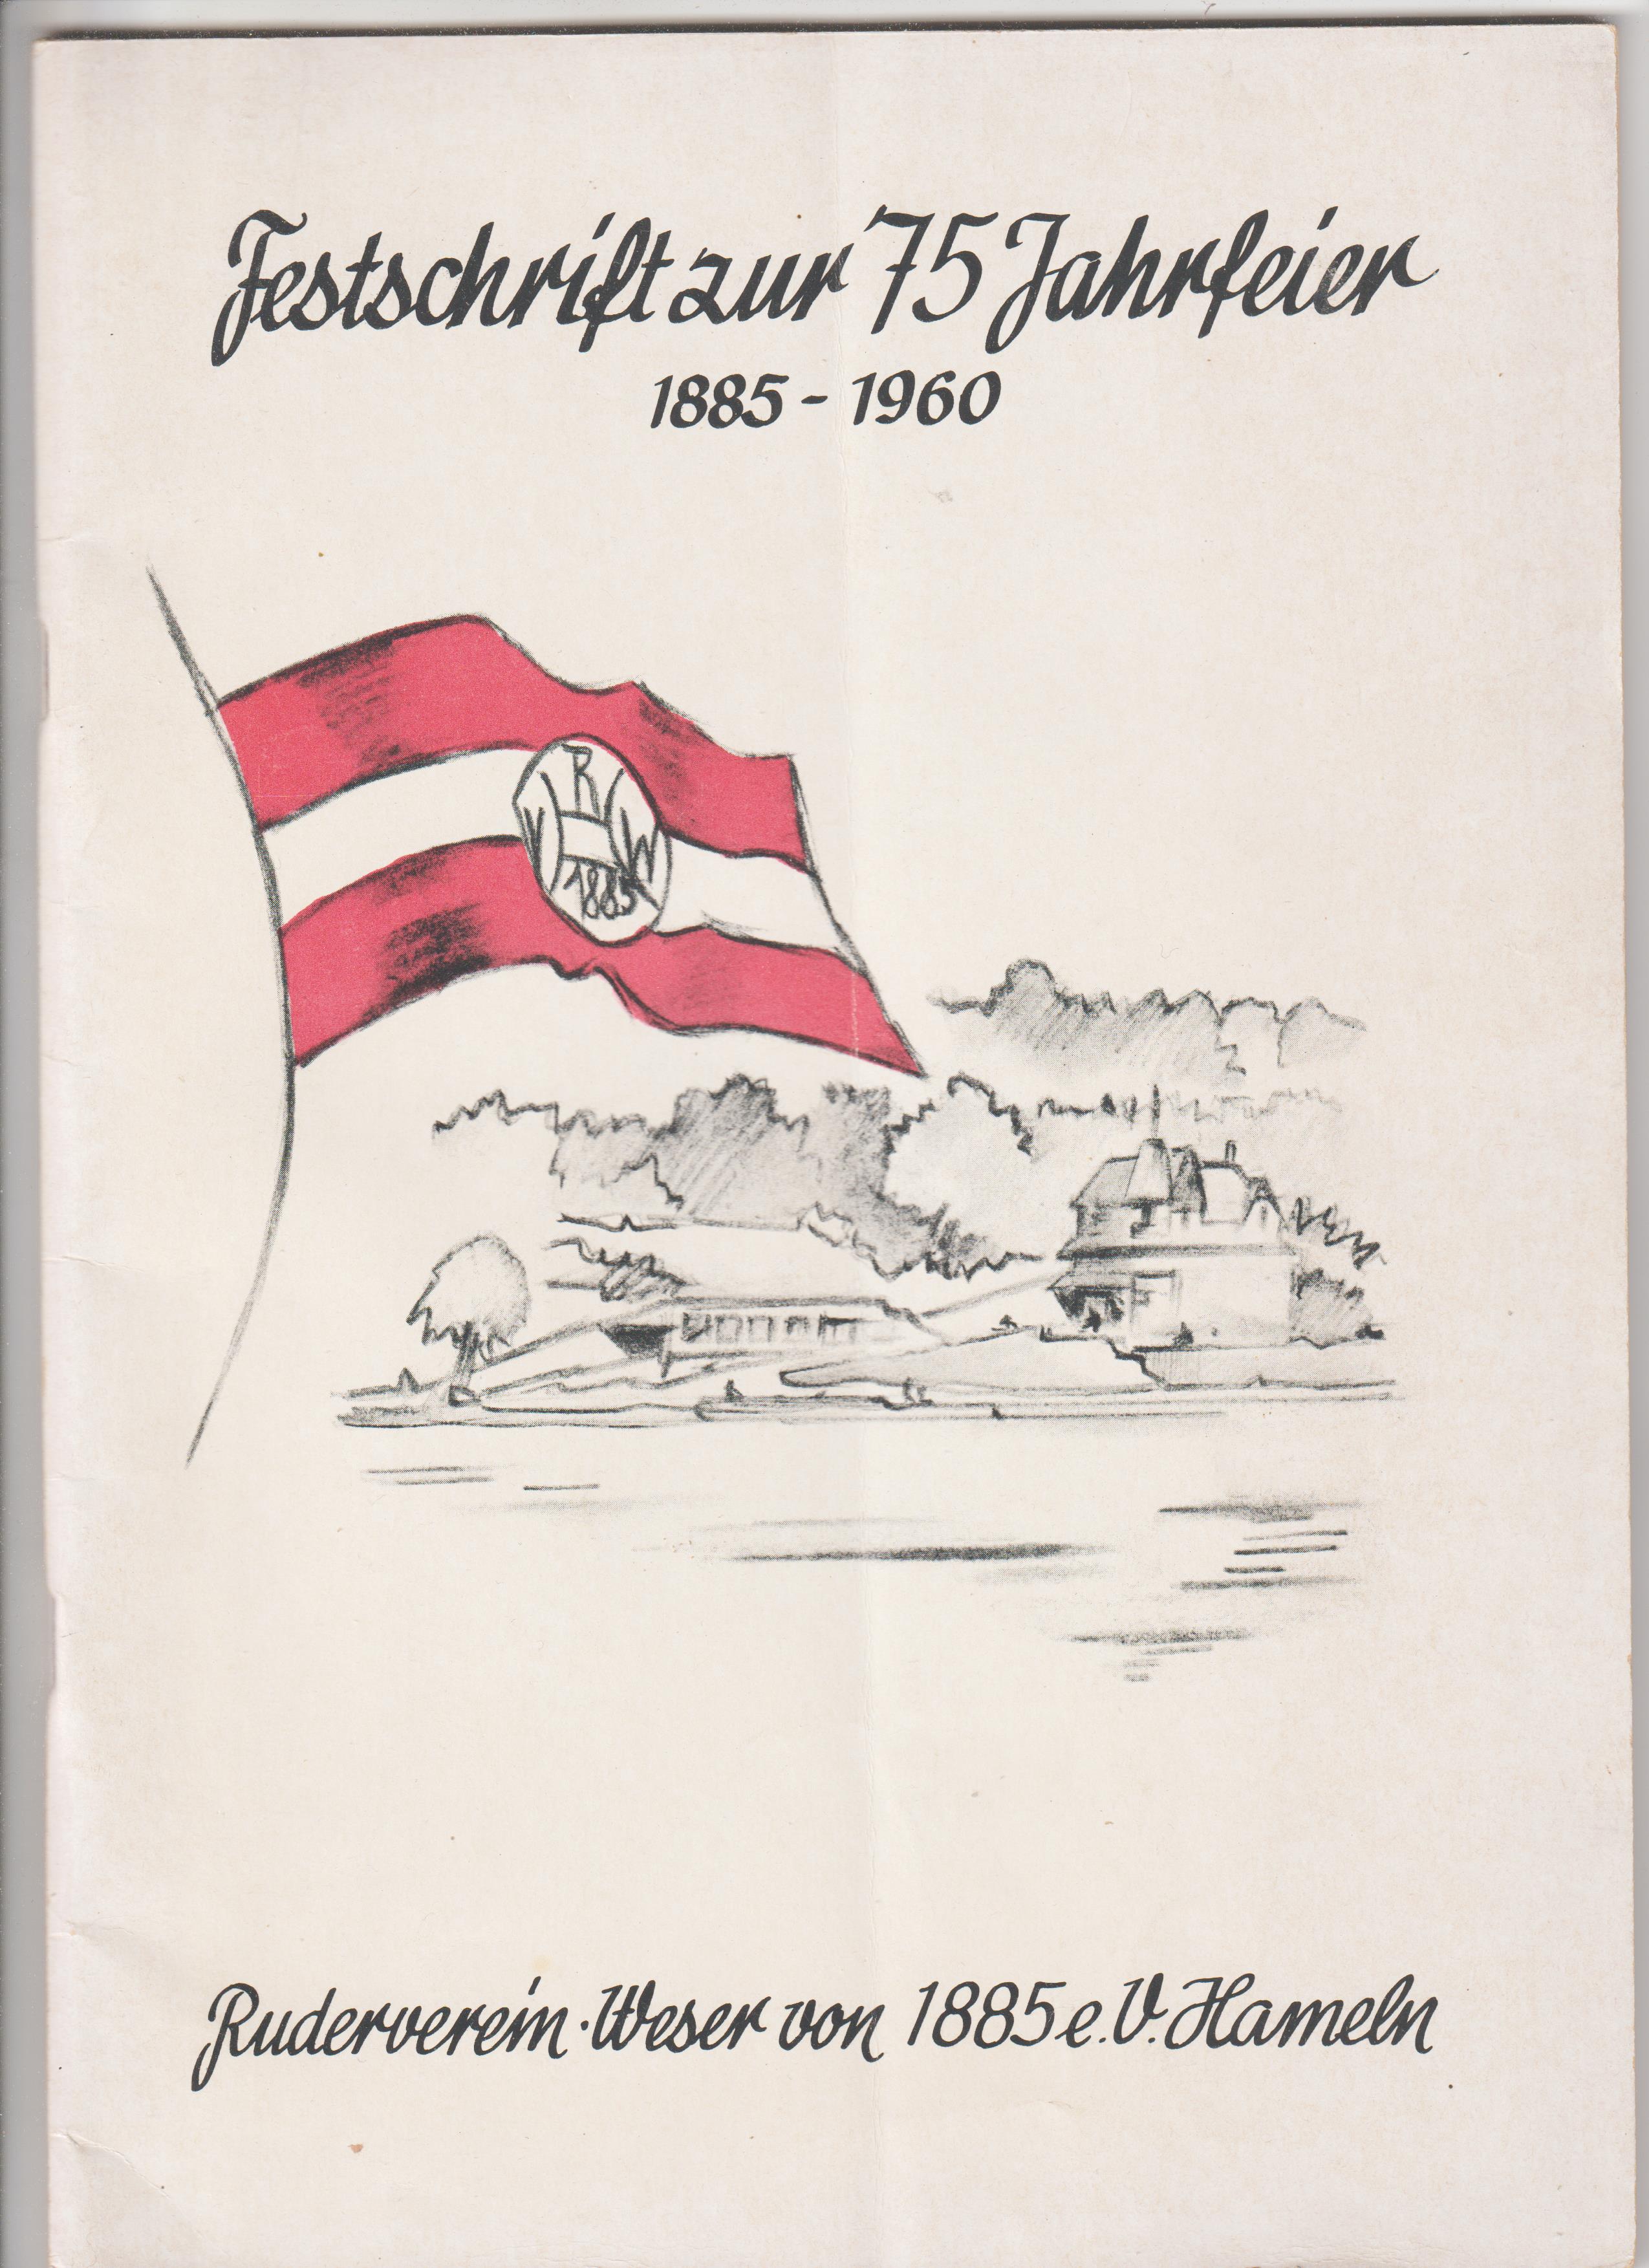 Book GER 1960 publication in honour of 75 years Ruderverein Weser Hameln